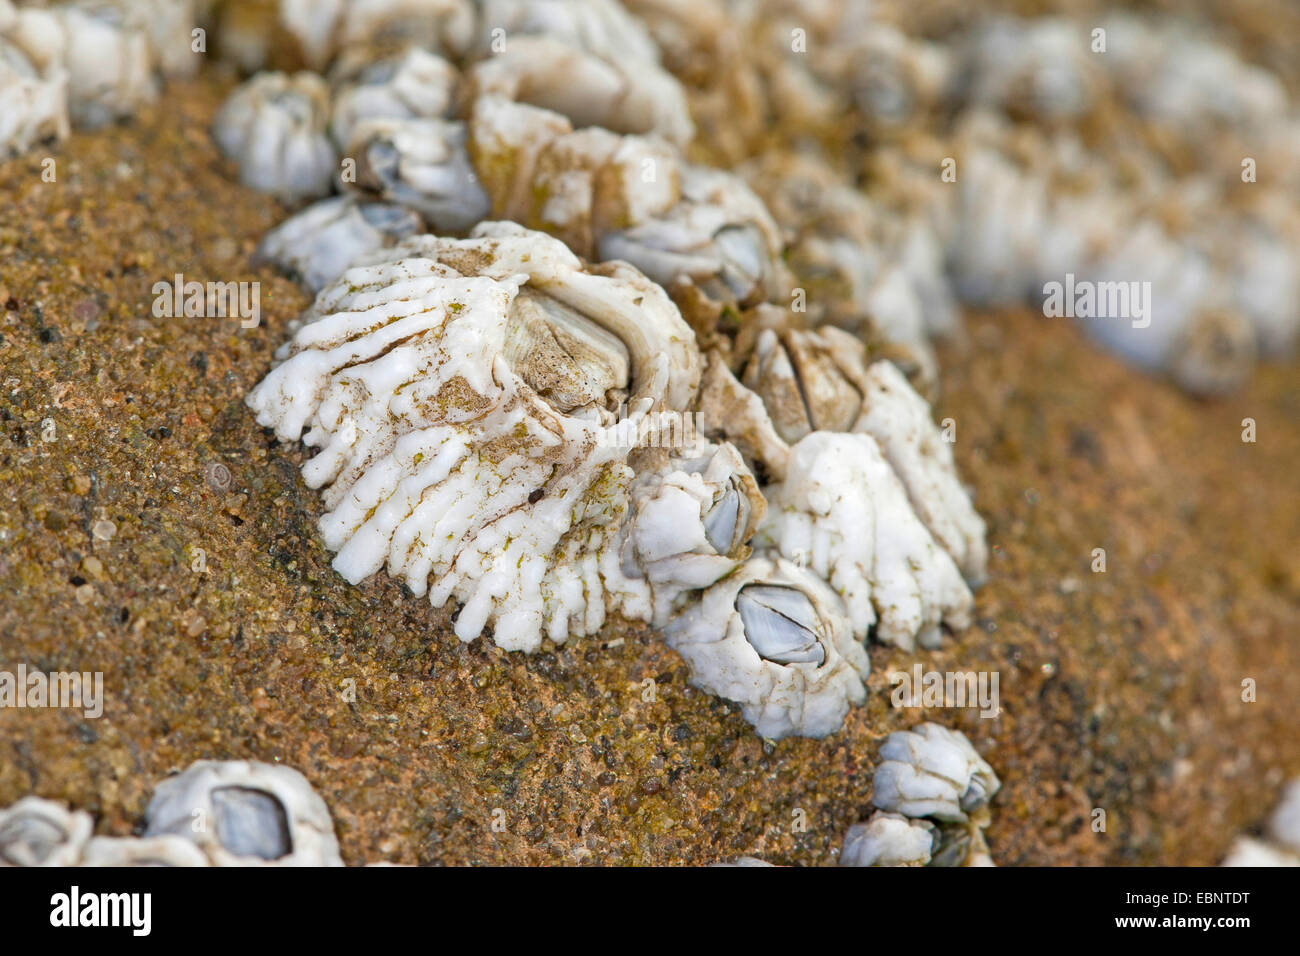 Northern rock barnacle, Acorn barnacle, Common rock barnacle (Semibalanus balanoides, Balanus balanoides), on a rock at seashore, Germany Stock Photo